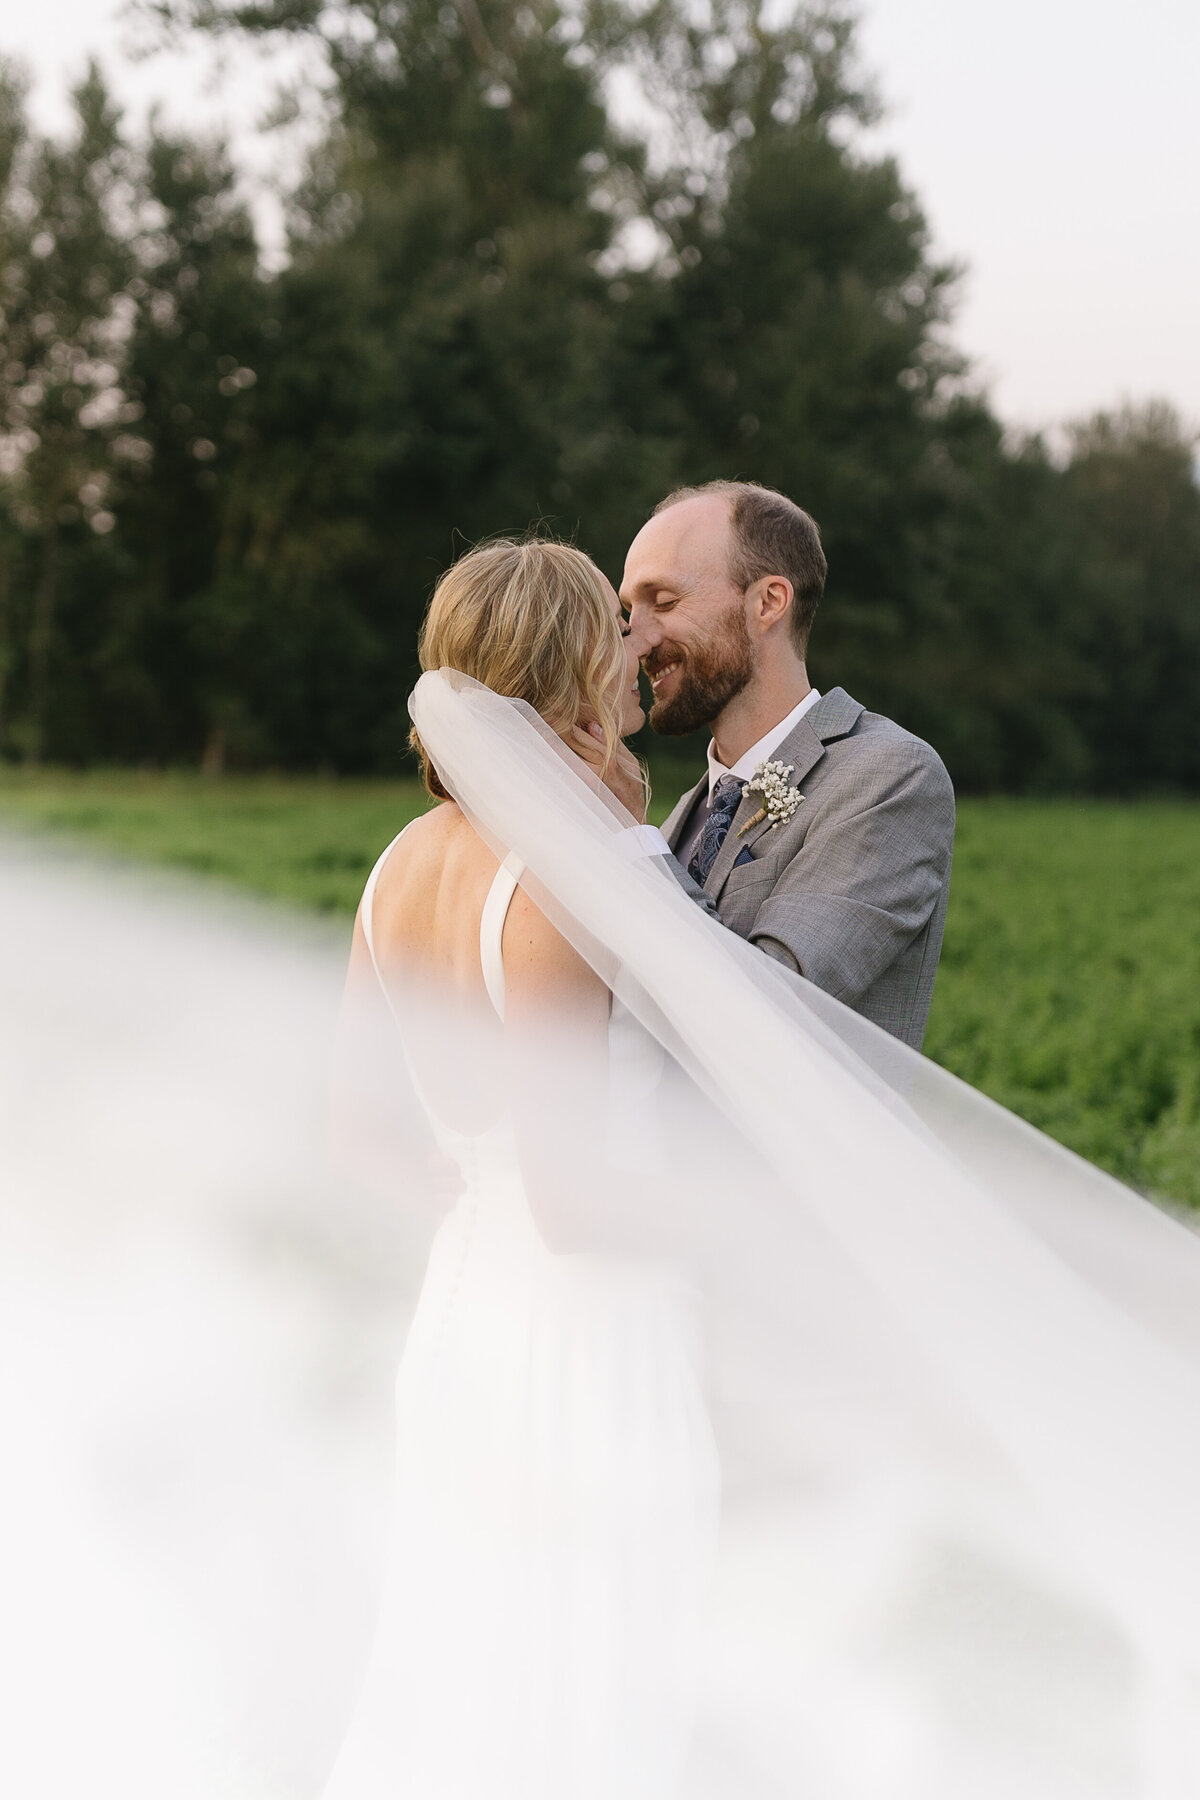 behind-the-veil-barriere-kamloops-wedding-photographer